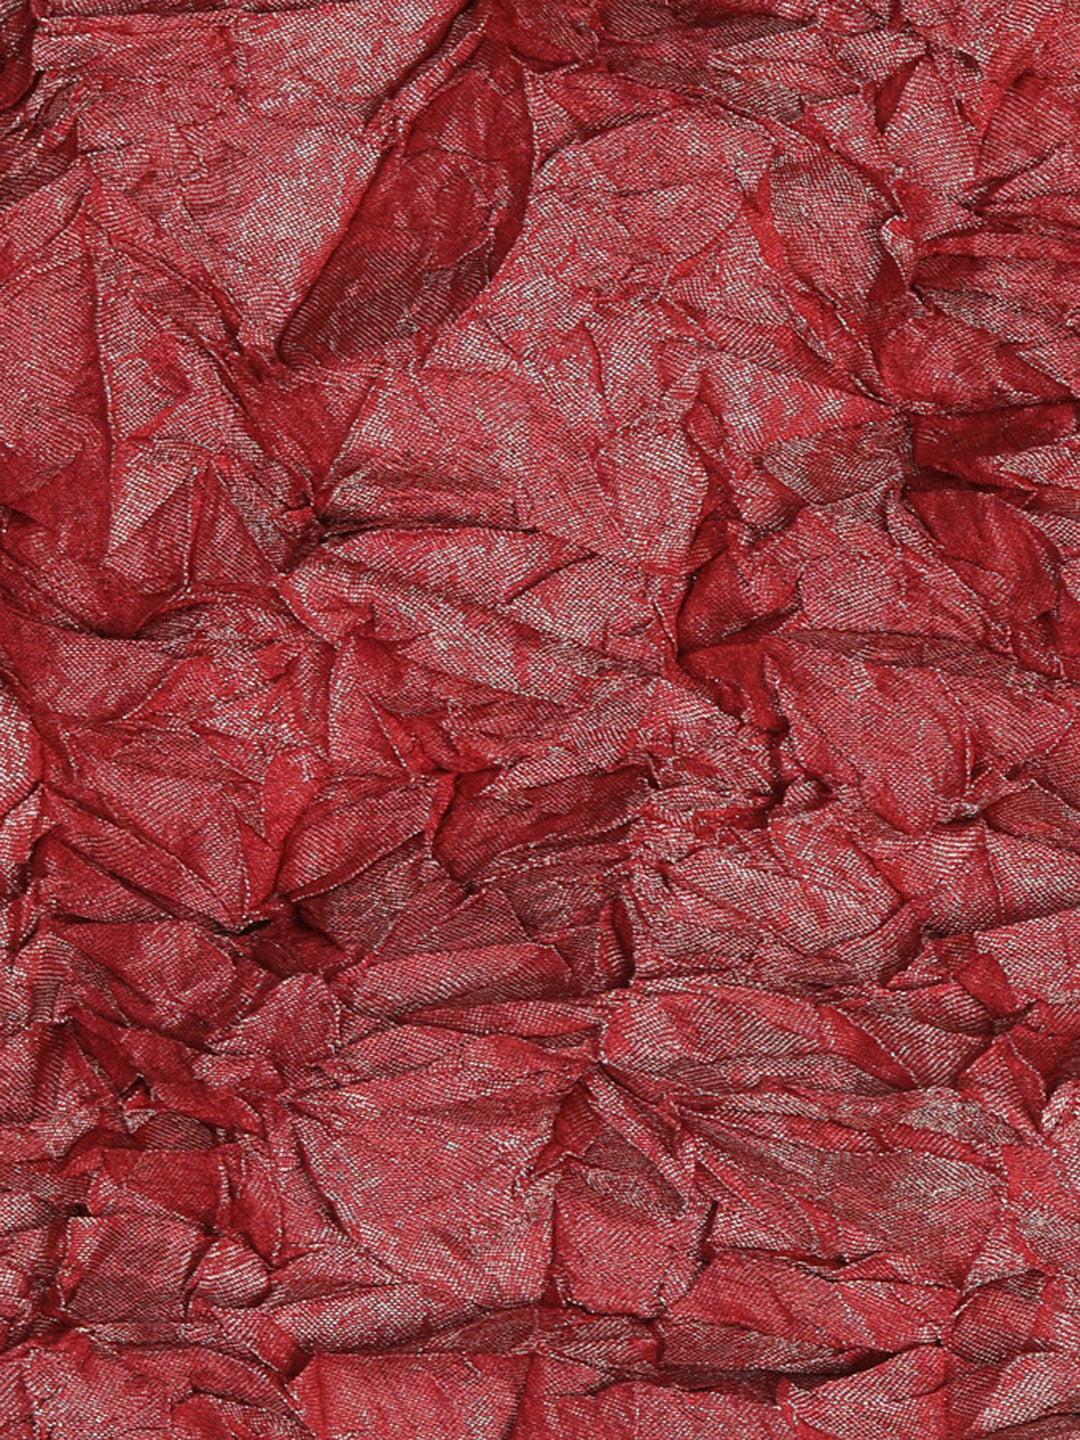 Red Crushed Gotta Tissue